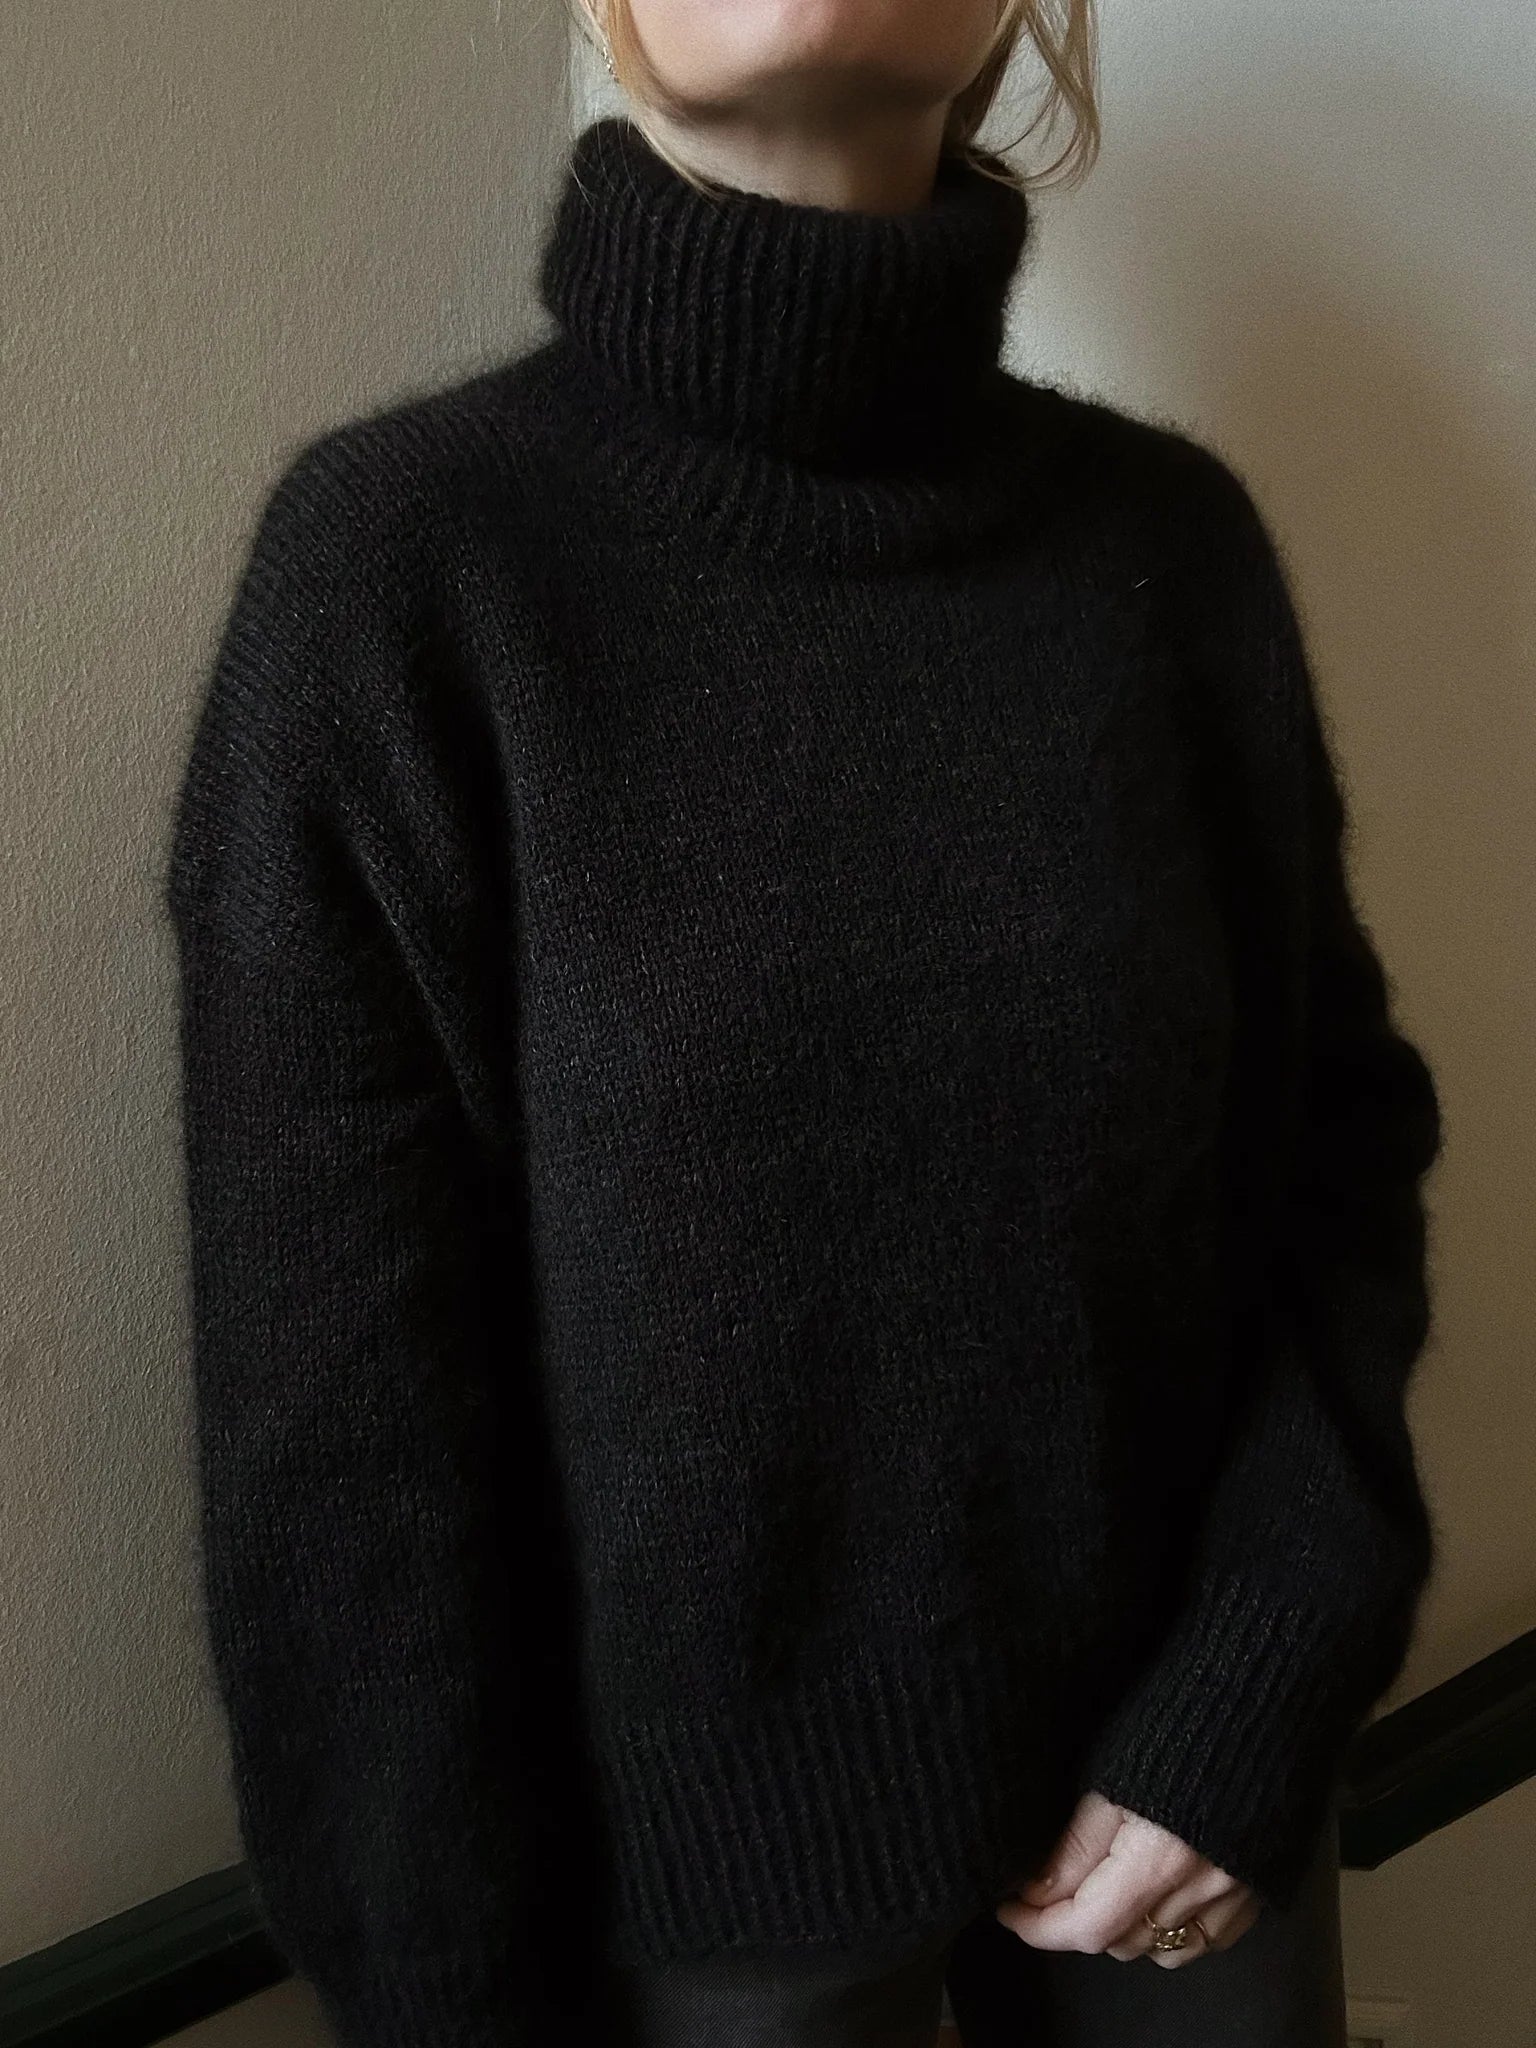 Sweater No. 11 light - My Favourite Things Knitwear - Strikkekit